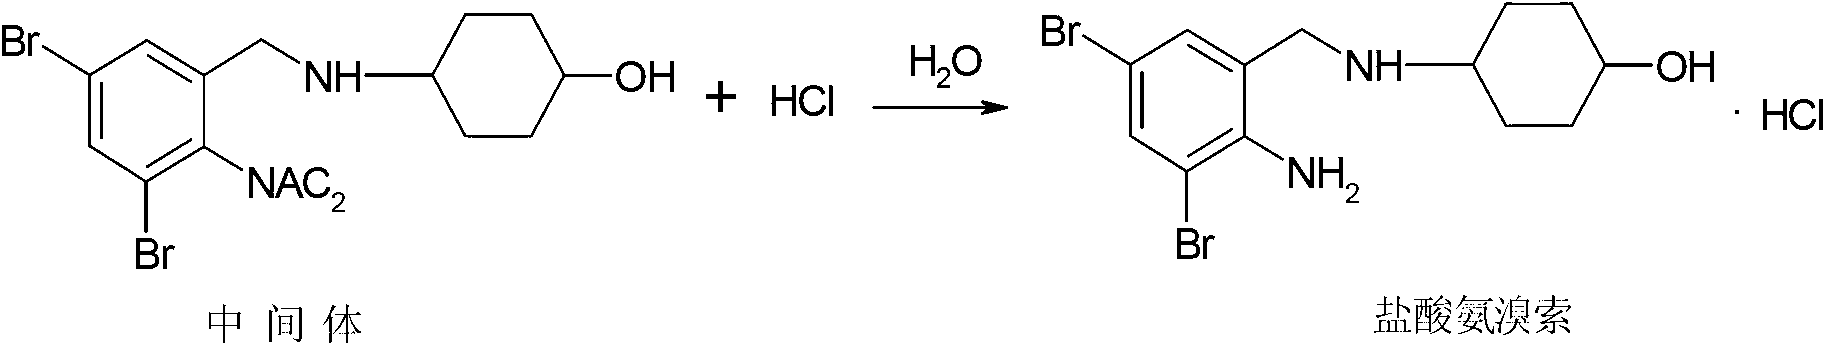 Ambroxol hydrochloride compound refining method